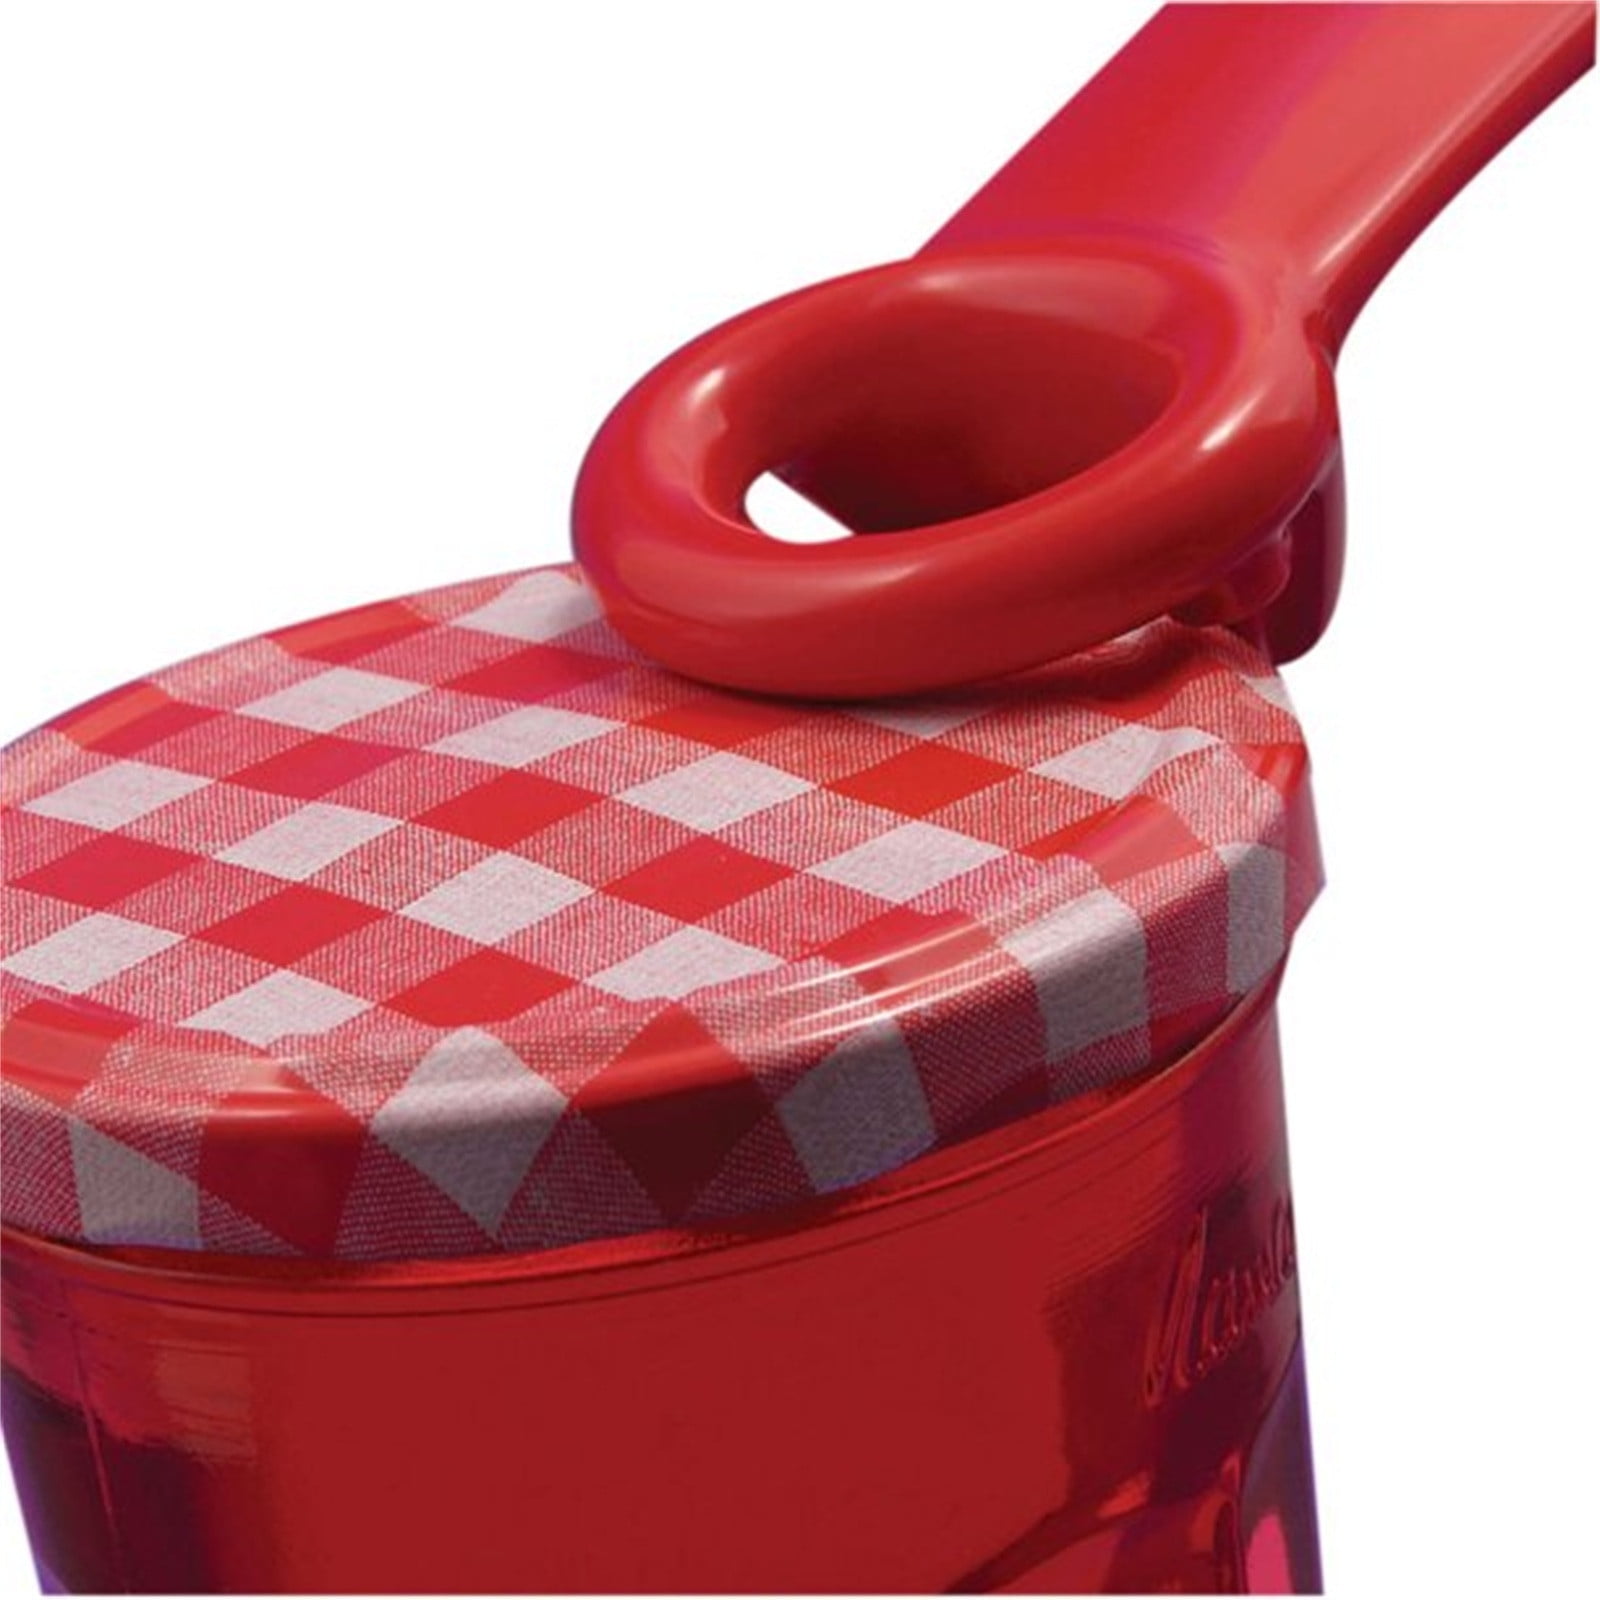 Jar opener – Homechase